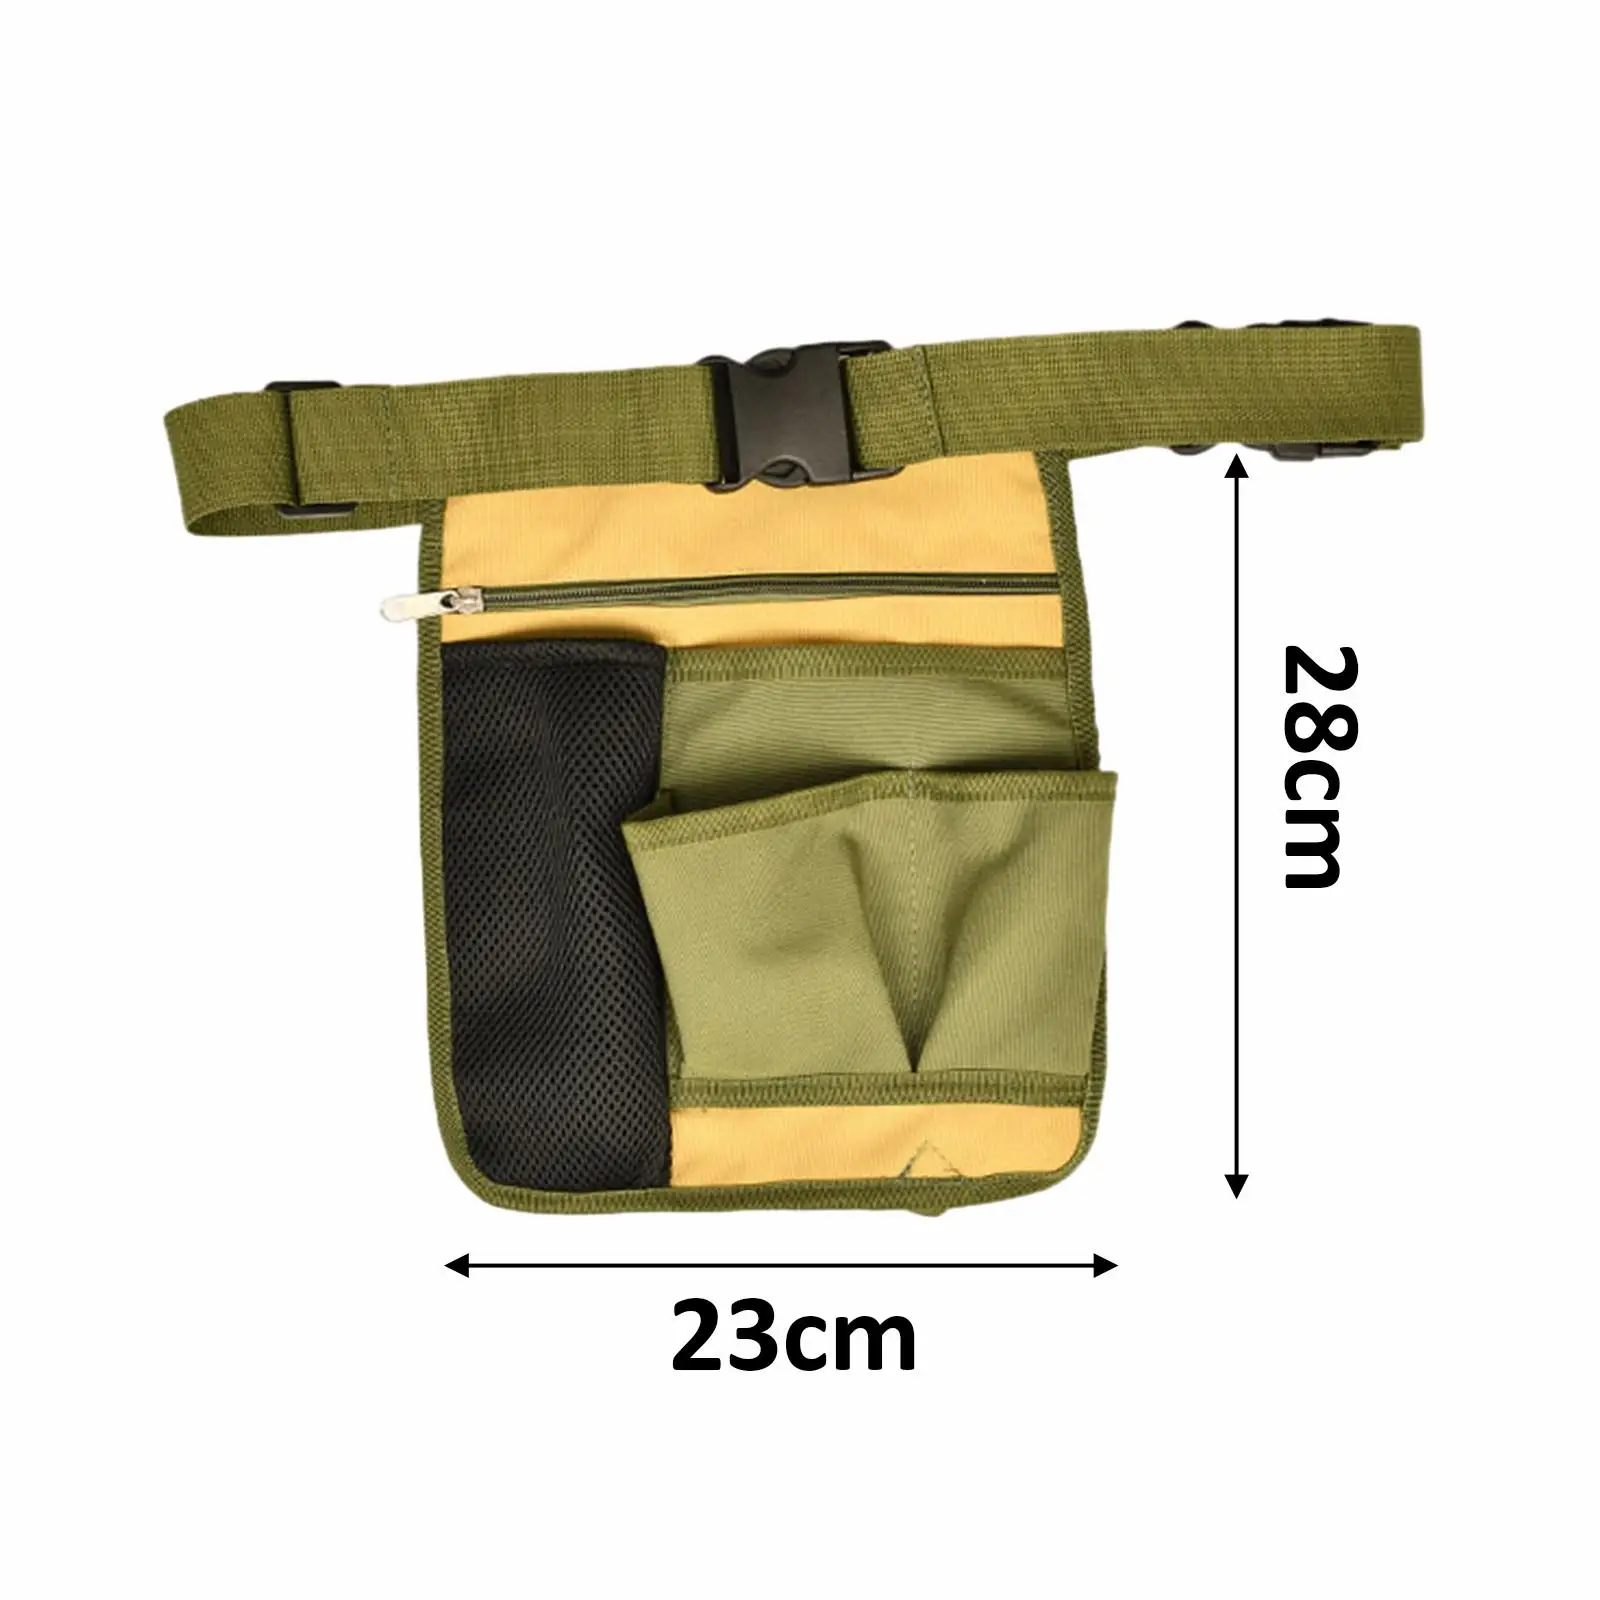 Garden Tool Pouch Waist Organizer Canvas Large Zipped Pocket with Adjustable Belt for Plumbing Lightweight Durable Accessories